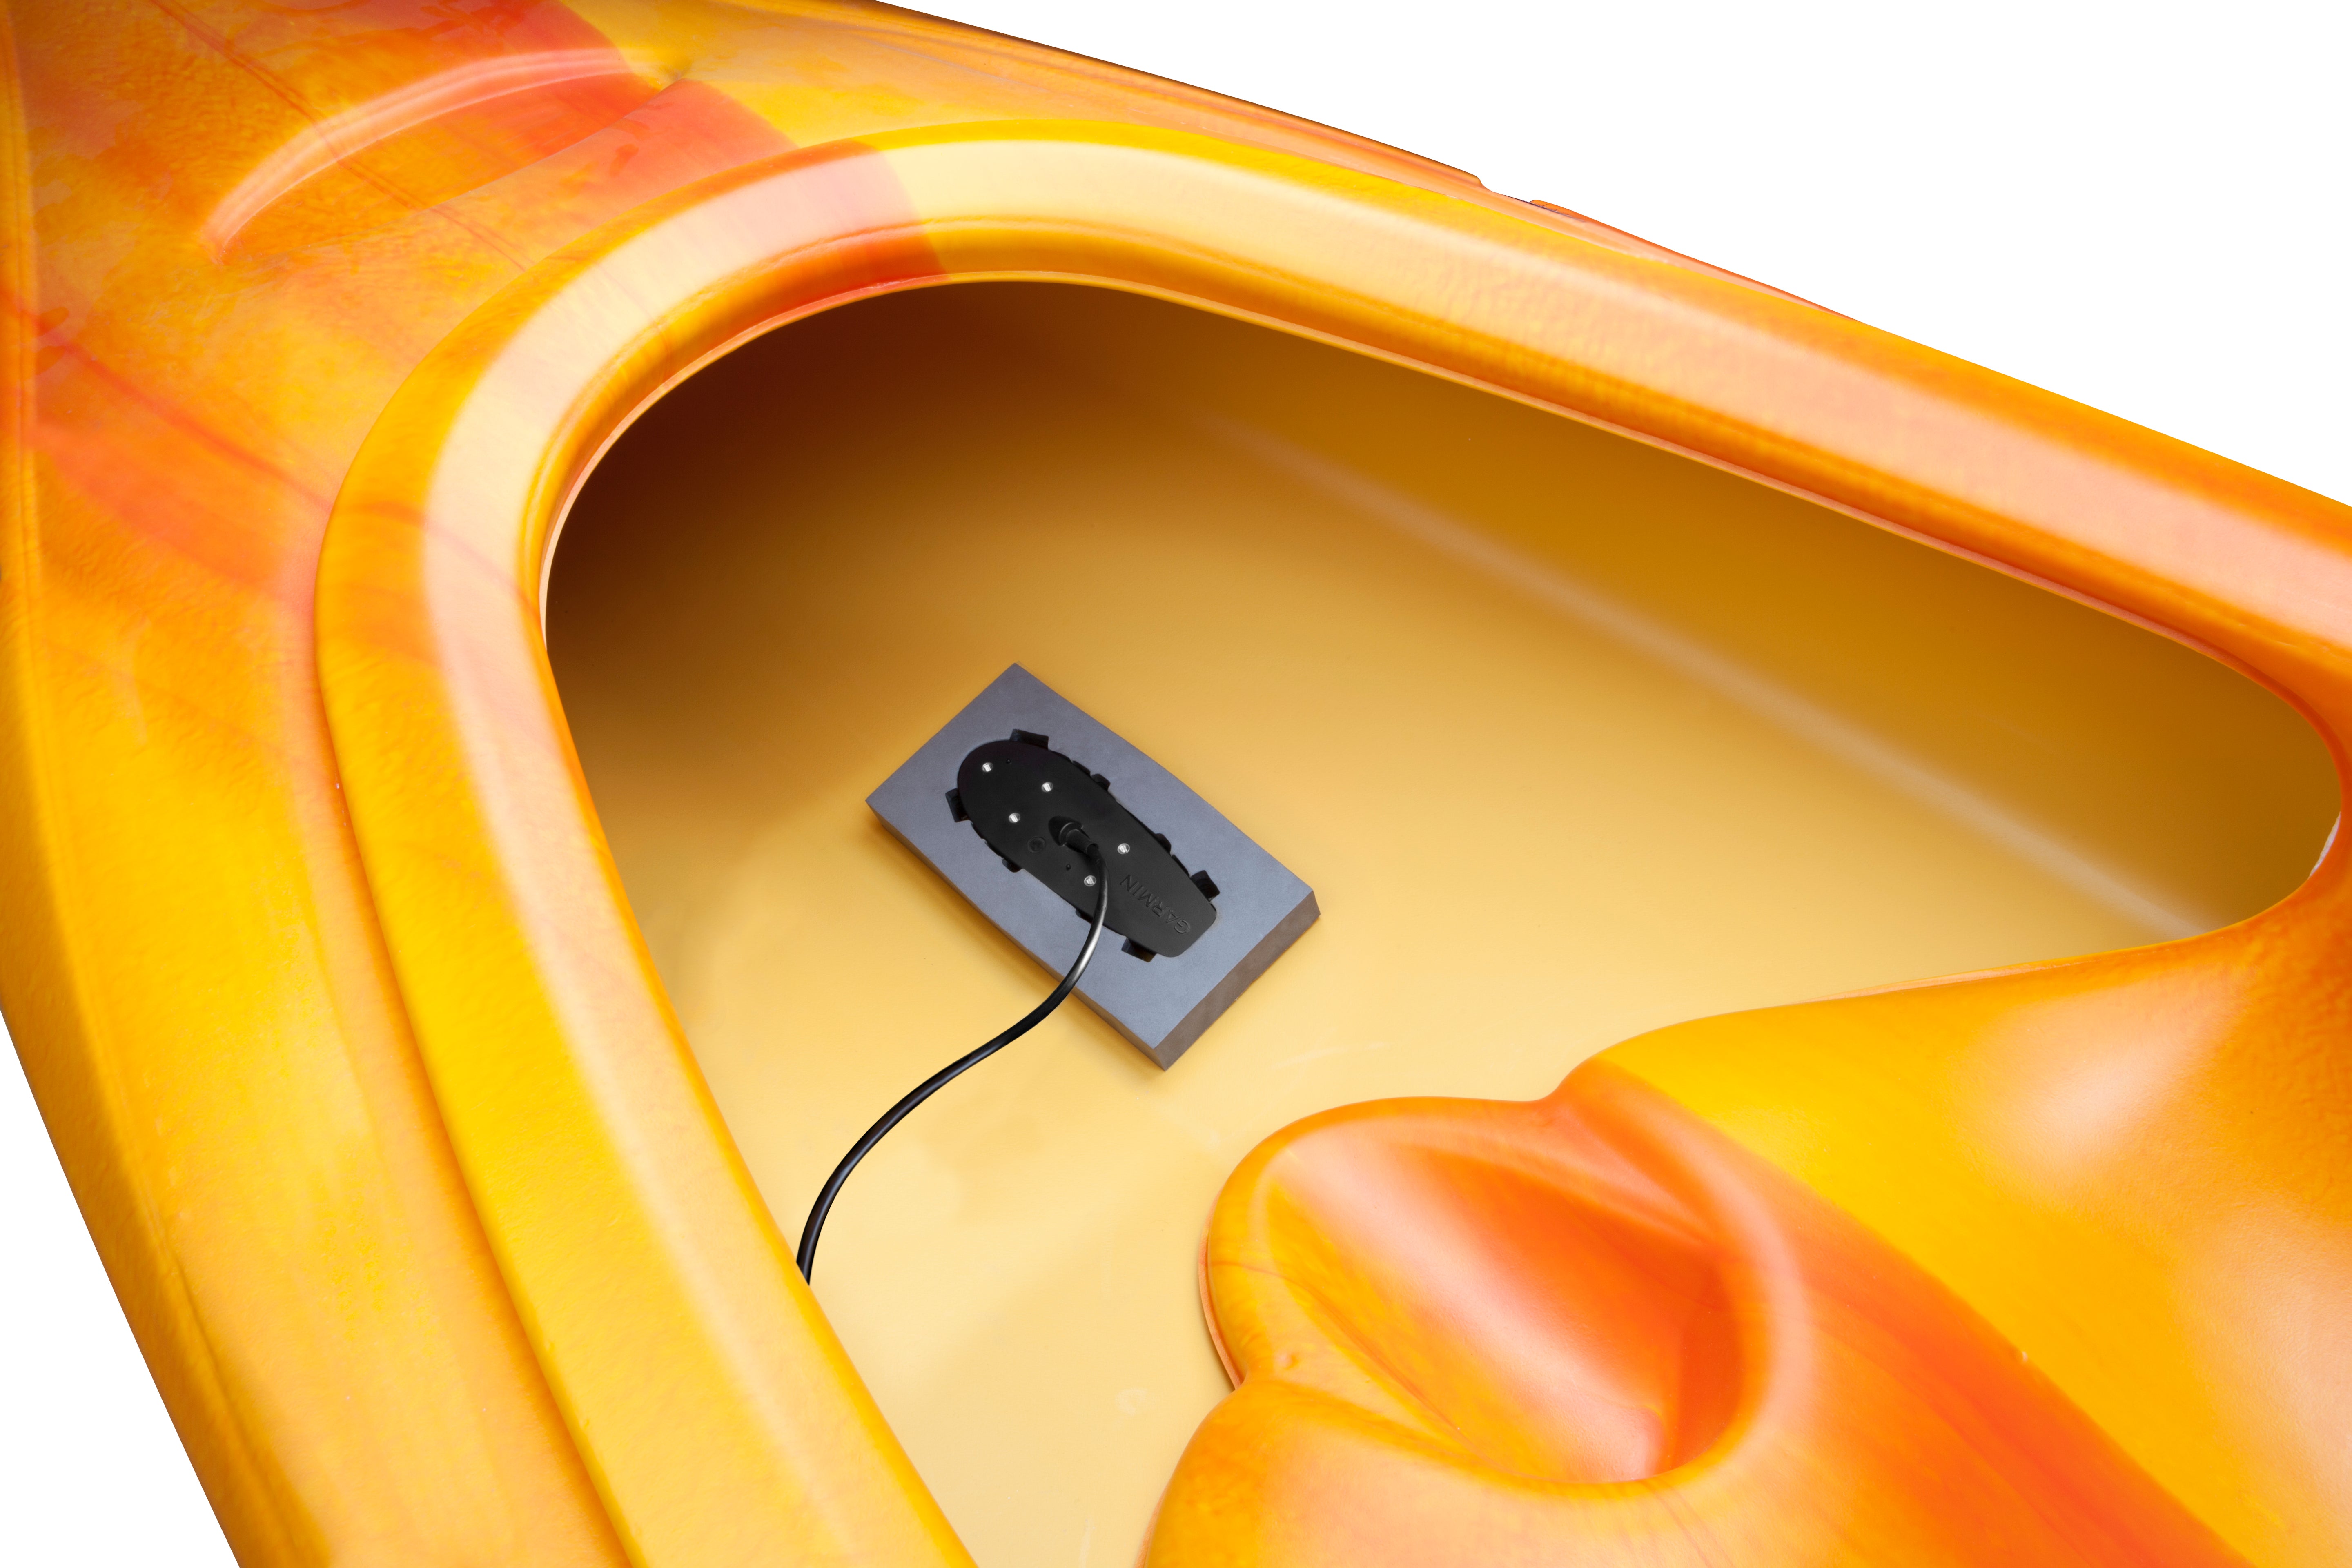 Garmin Hull-through transducer holder for kayak